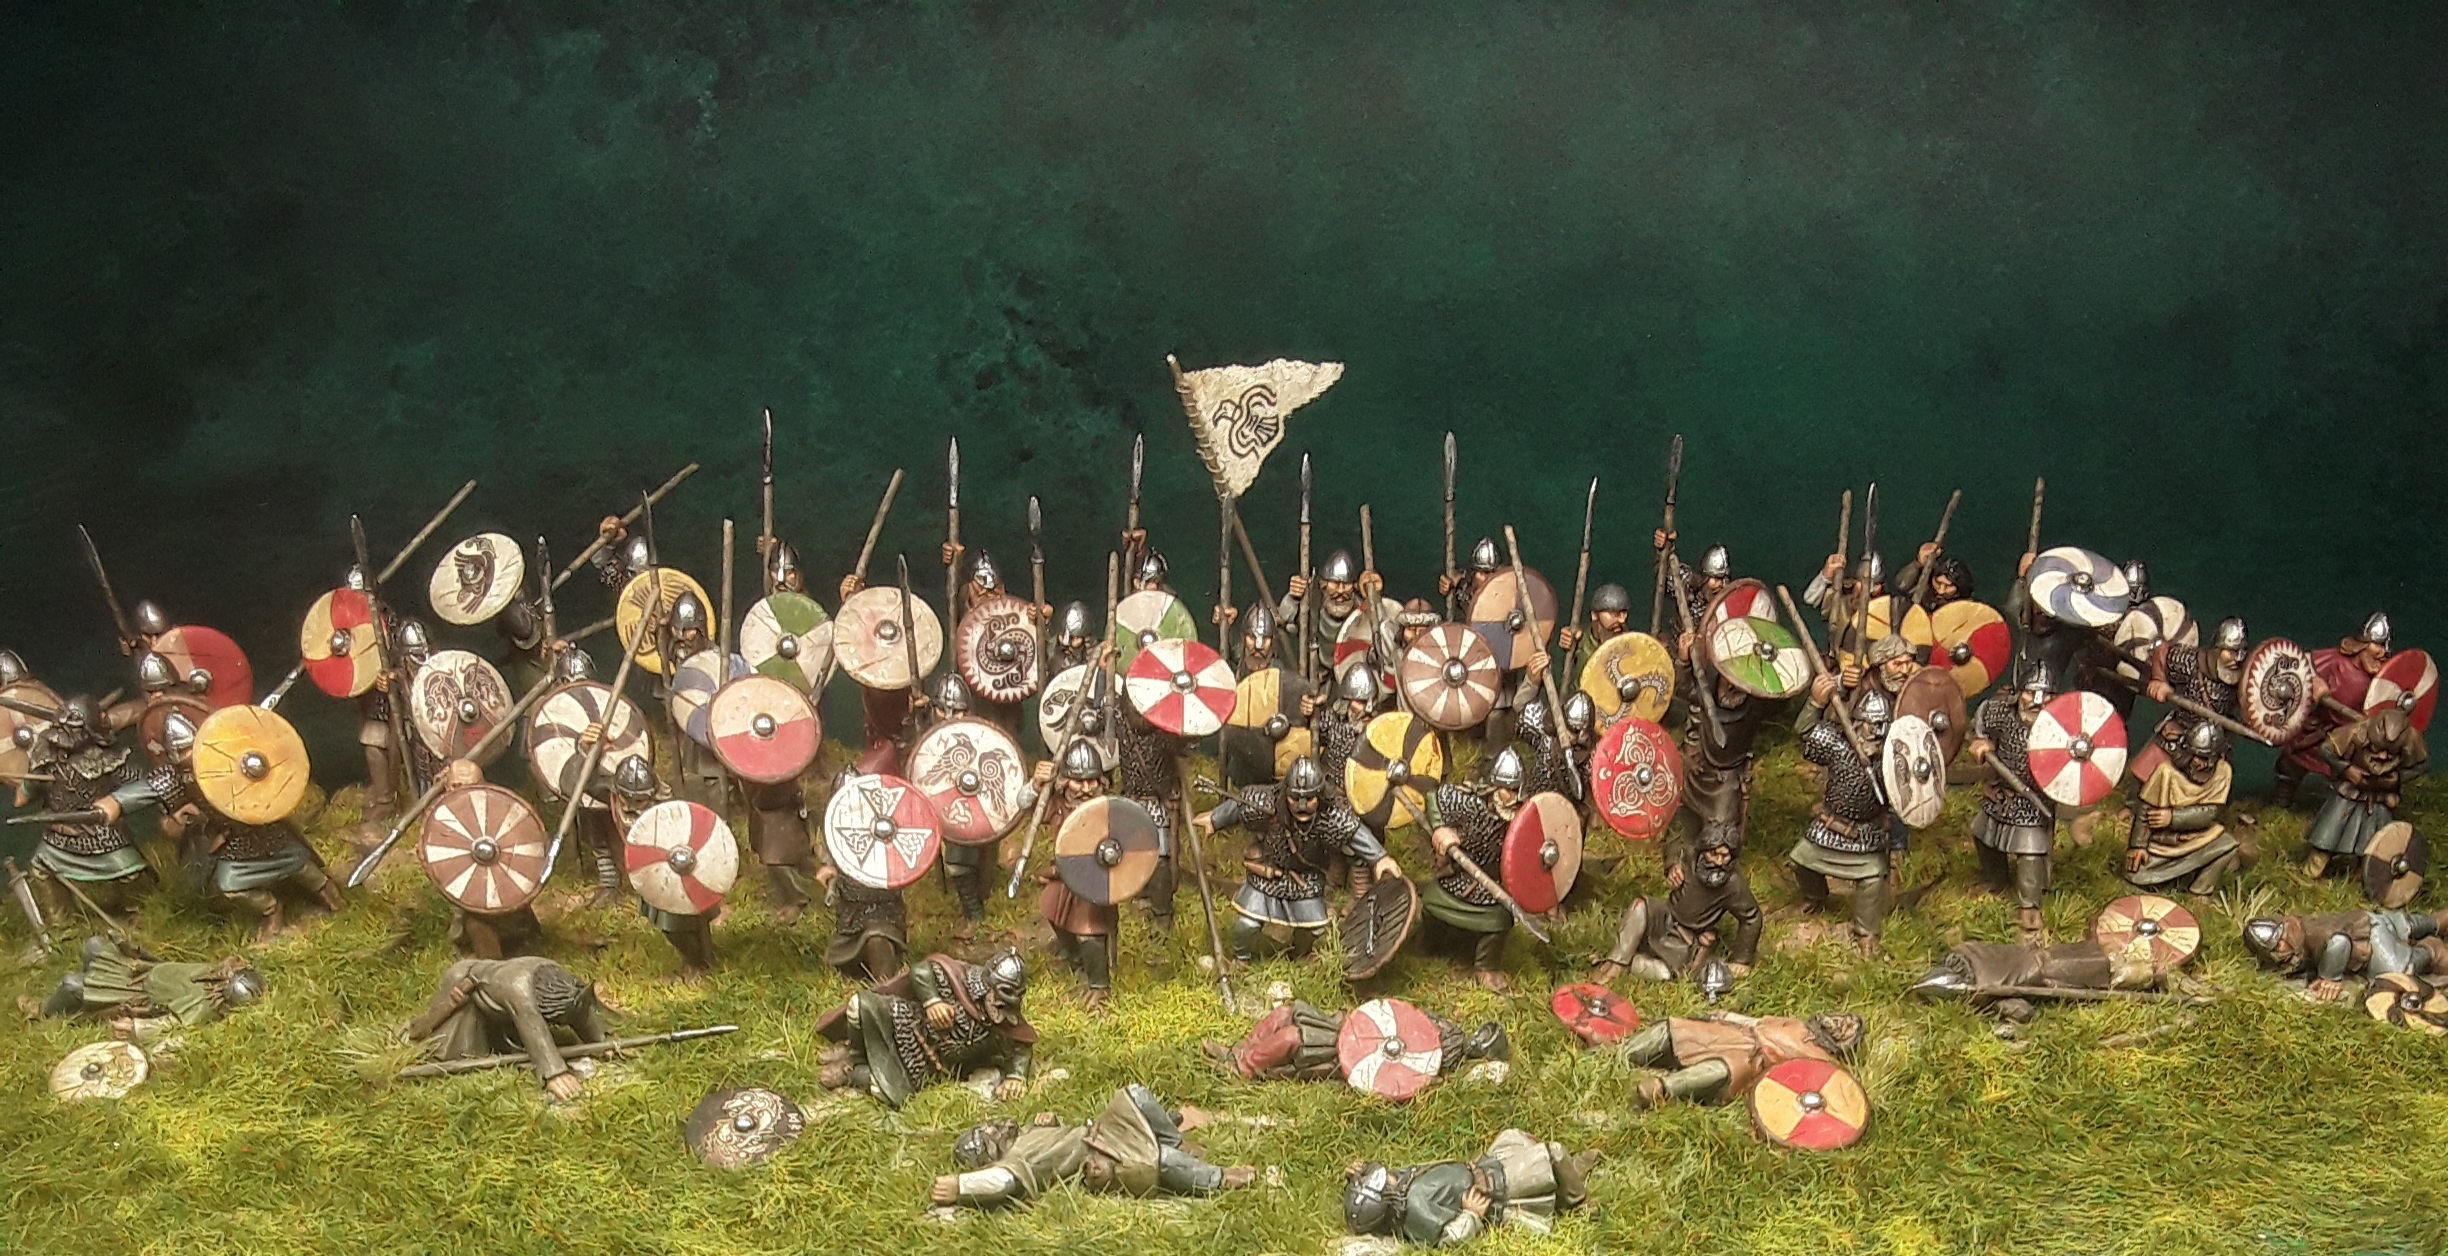 Ragnarok Miniatures' Sons of Odin Vikings Figures